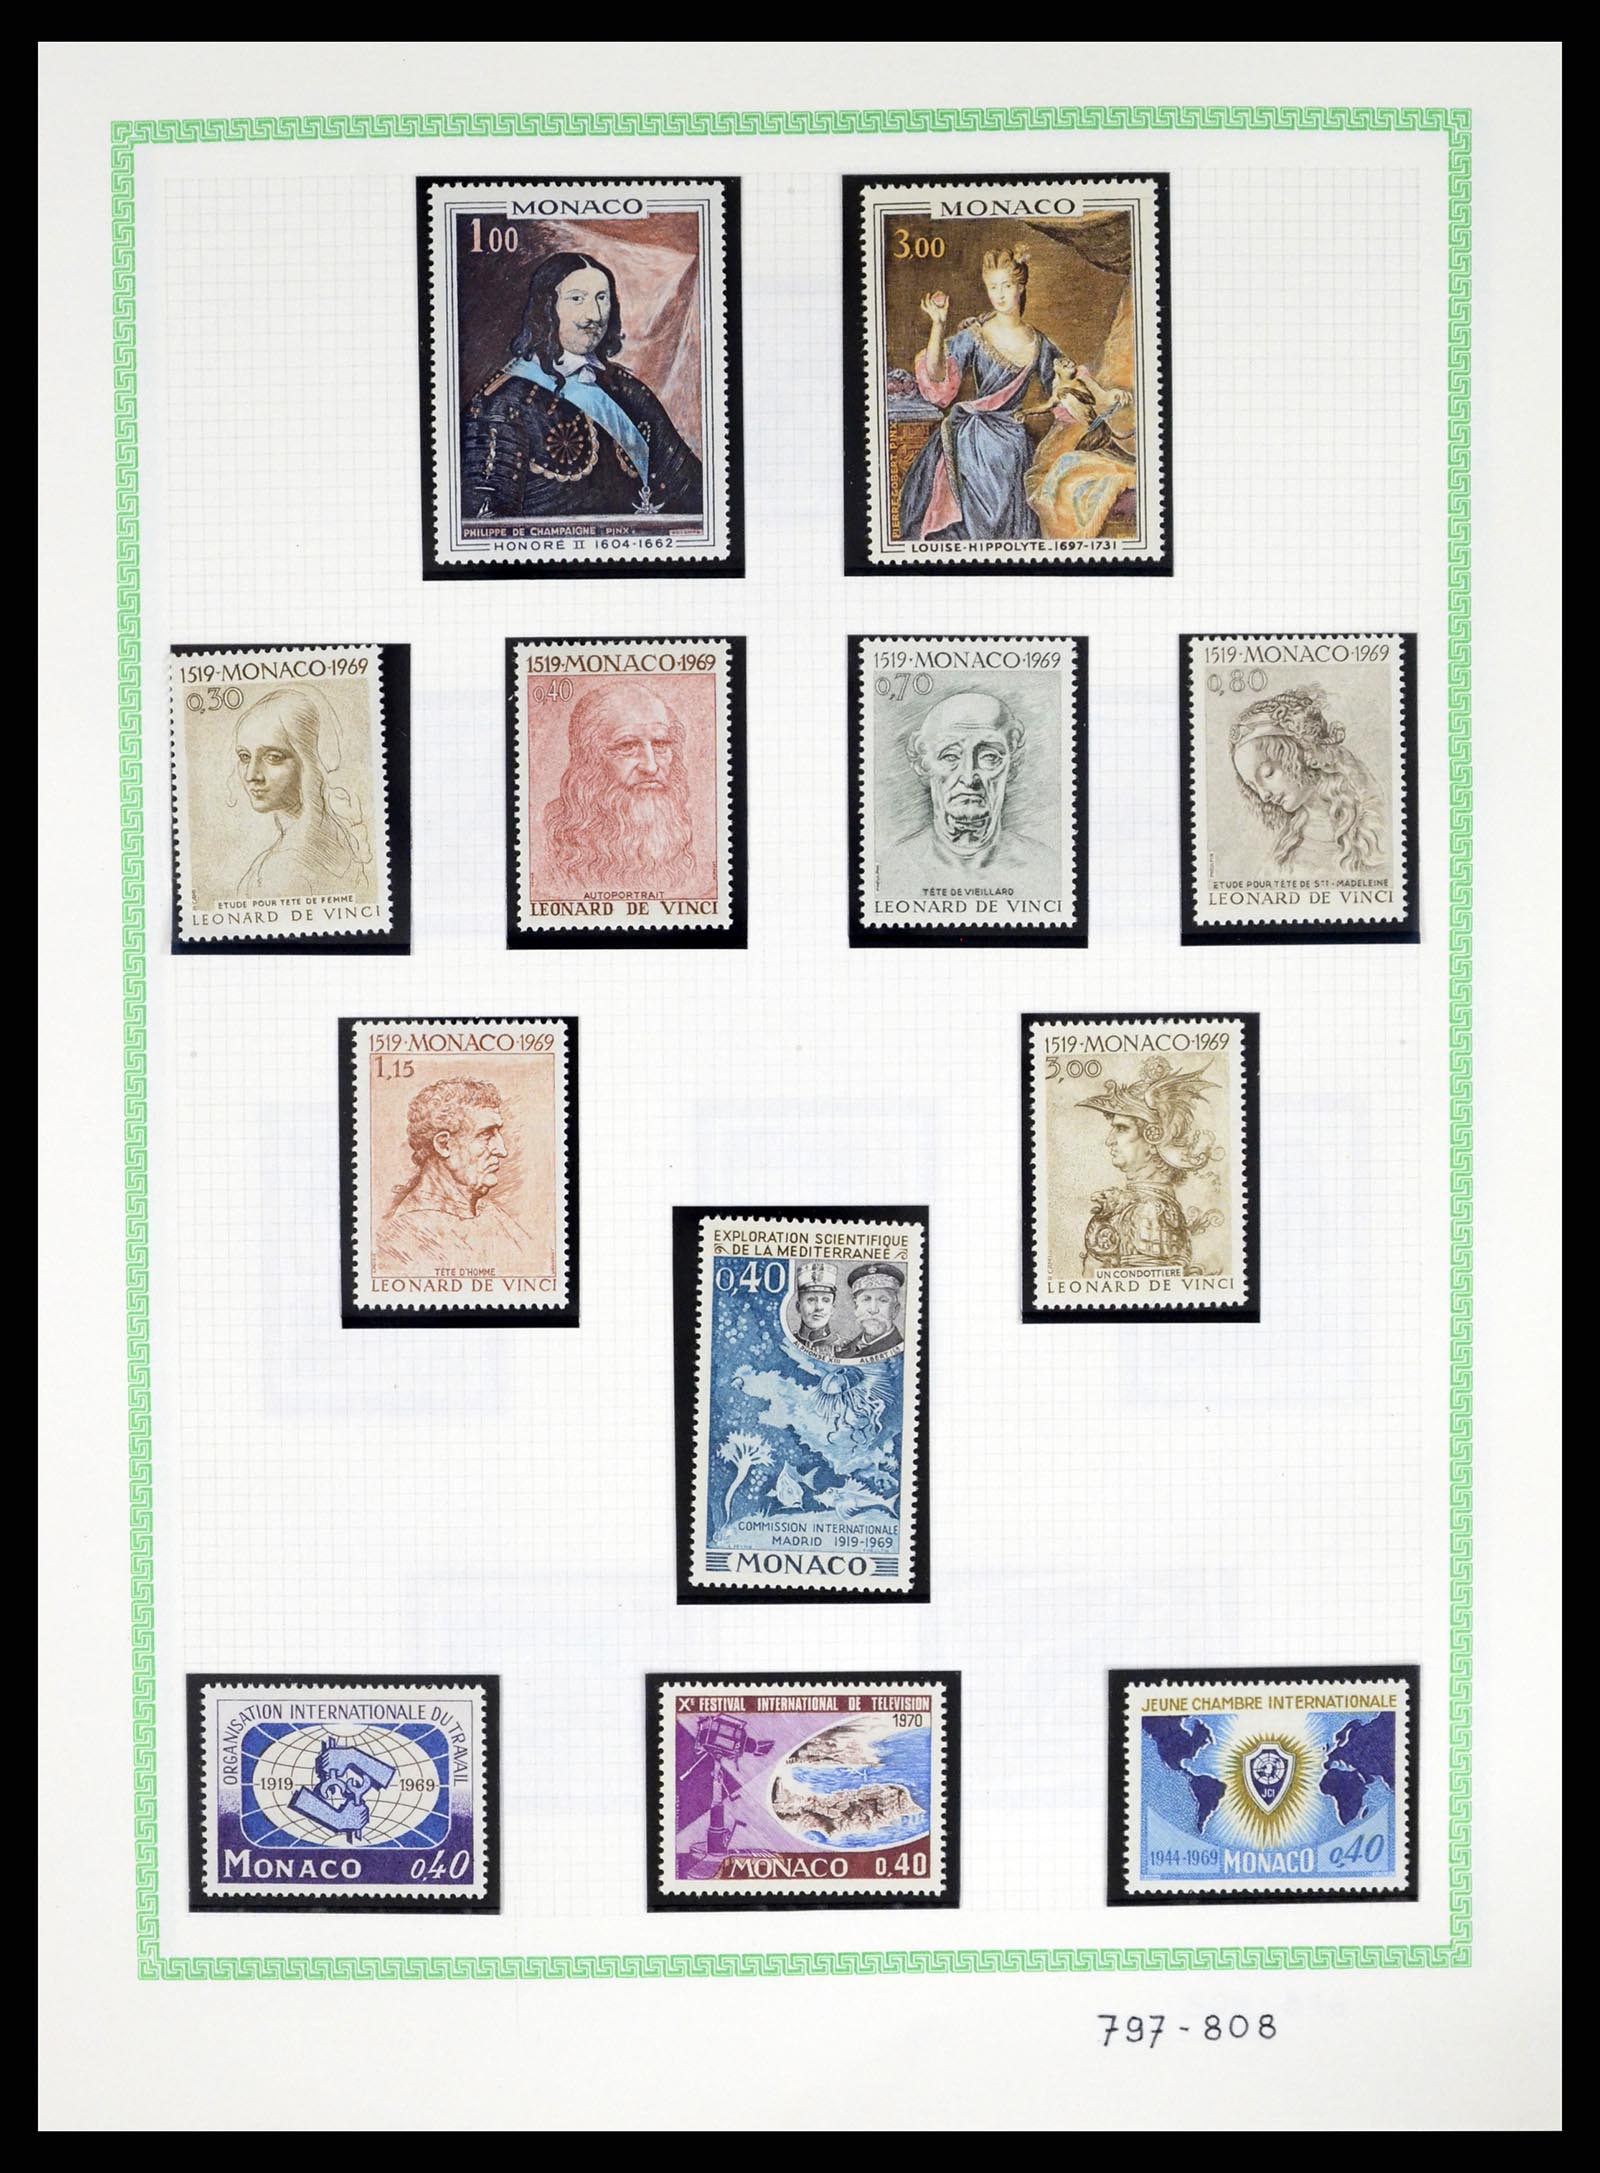 37380 077 - Stamp collection 37380 Monaco 1921-2015.